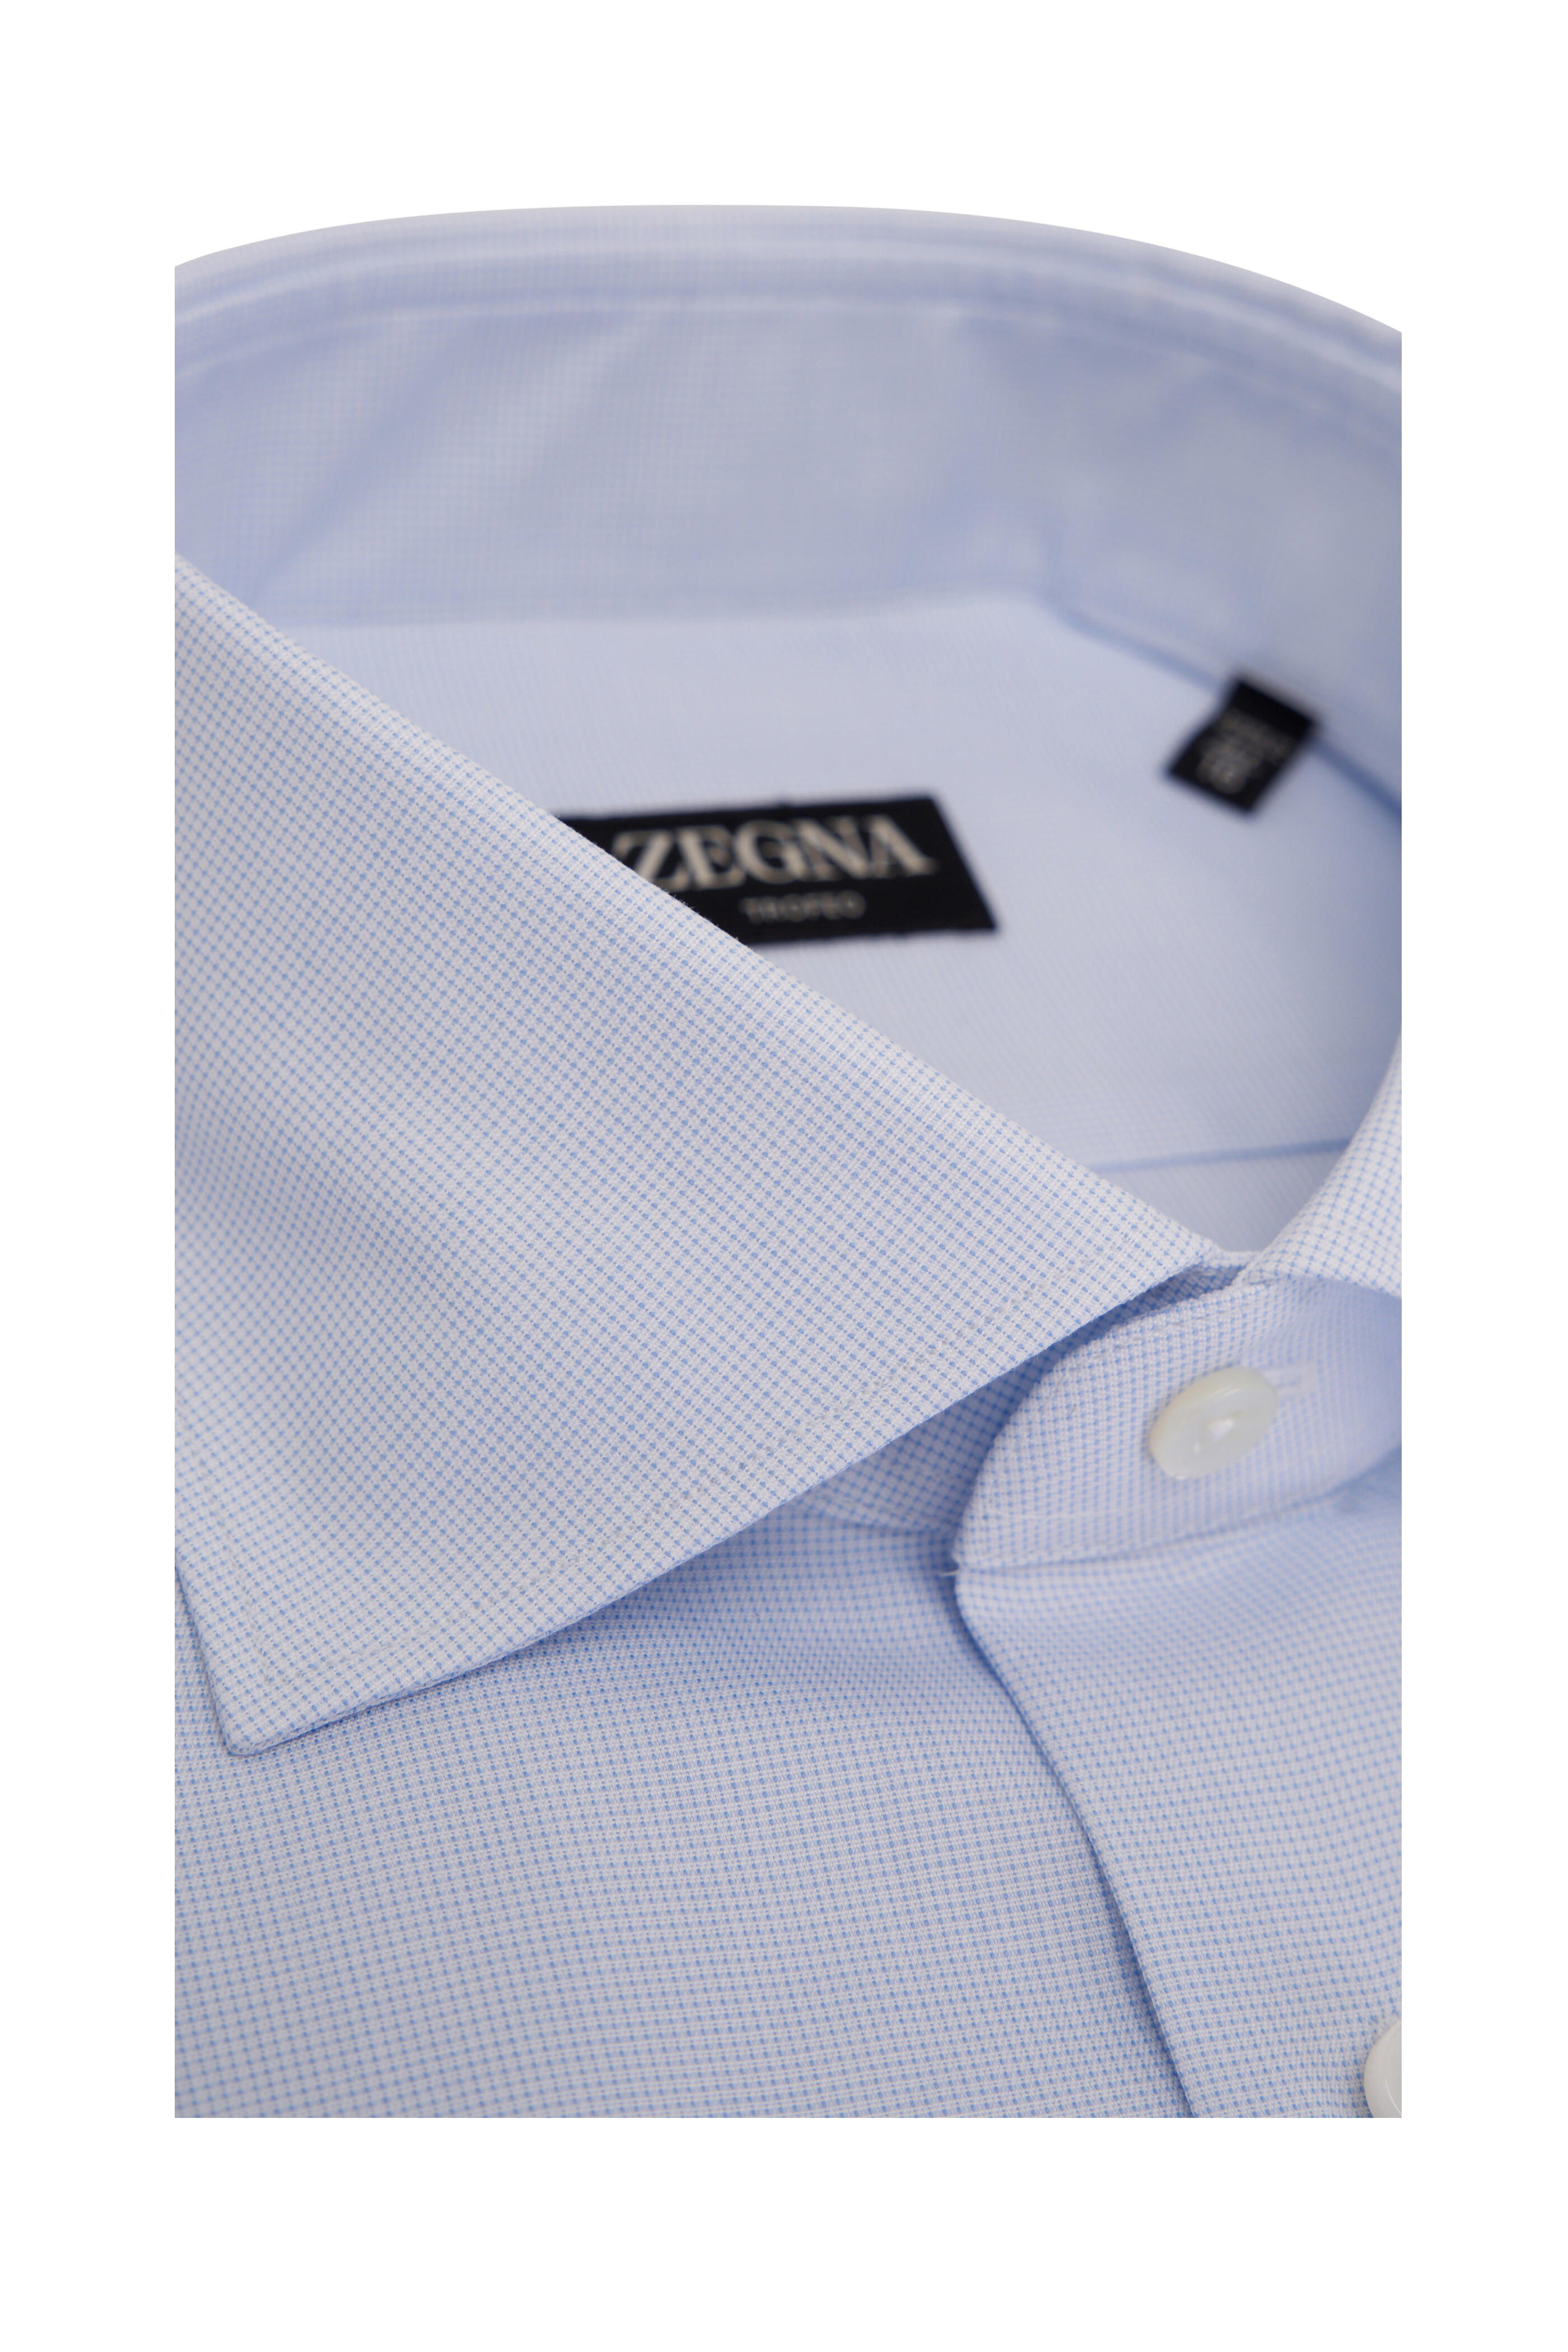 Zegna - Blue Micro Check Cotton Dress Shirt | Mitchell Stores